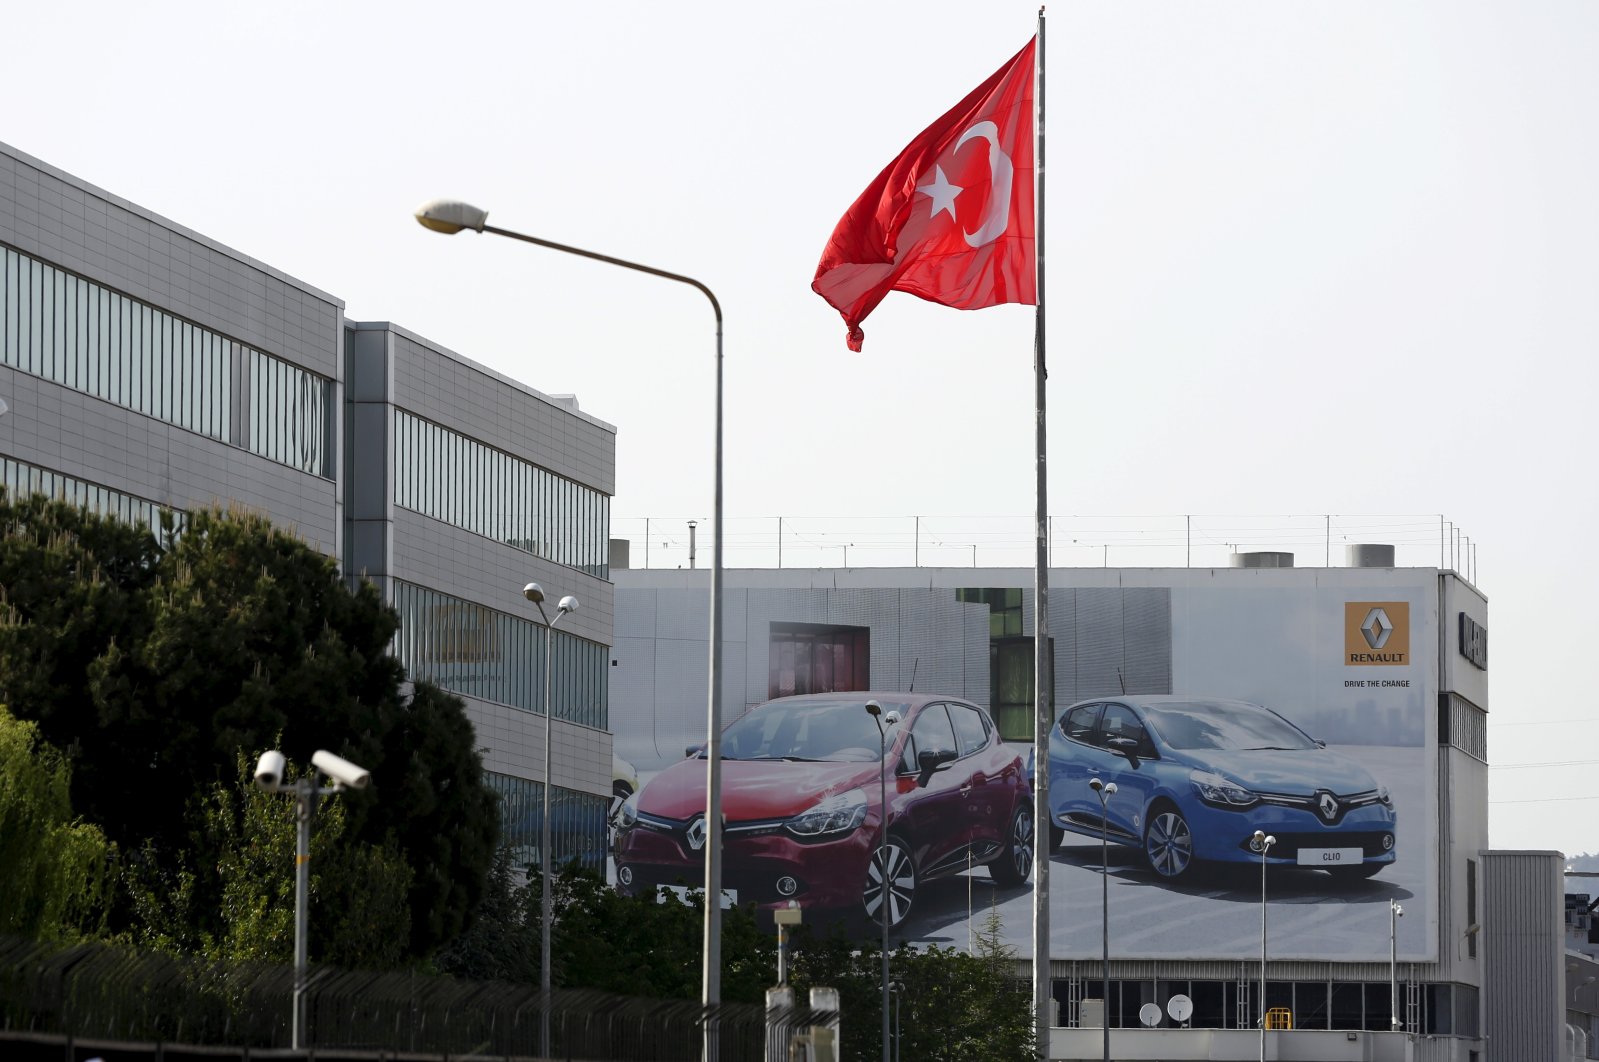 The Oyak Renault car plant is seen in Bursa, northwestern Turkey, May 17, 2015. (Reuters Photo)